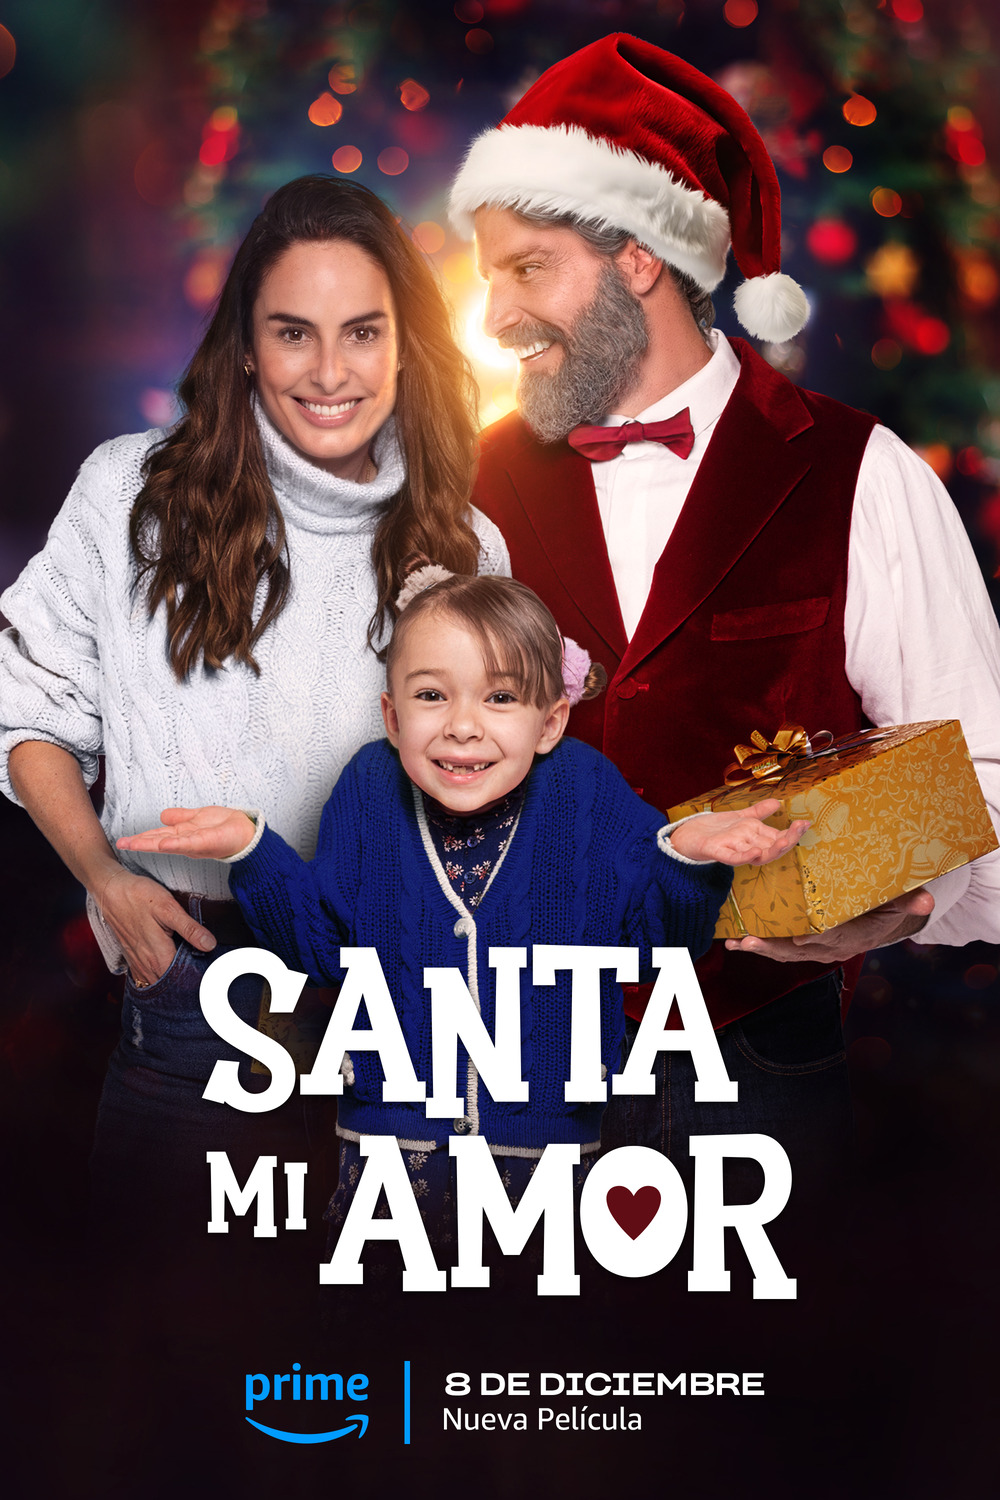 Extra Large Movie Poster Image for Santa Mi Amor 